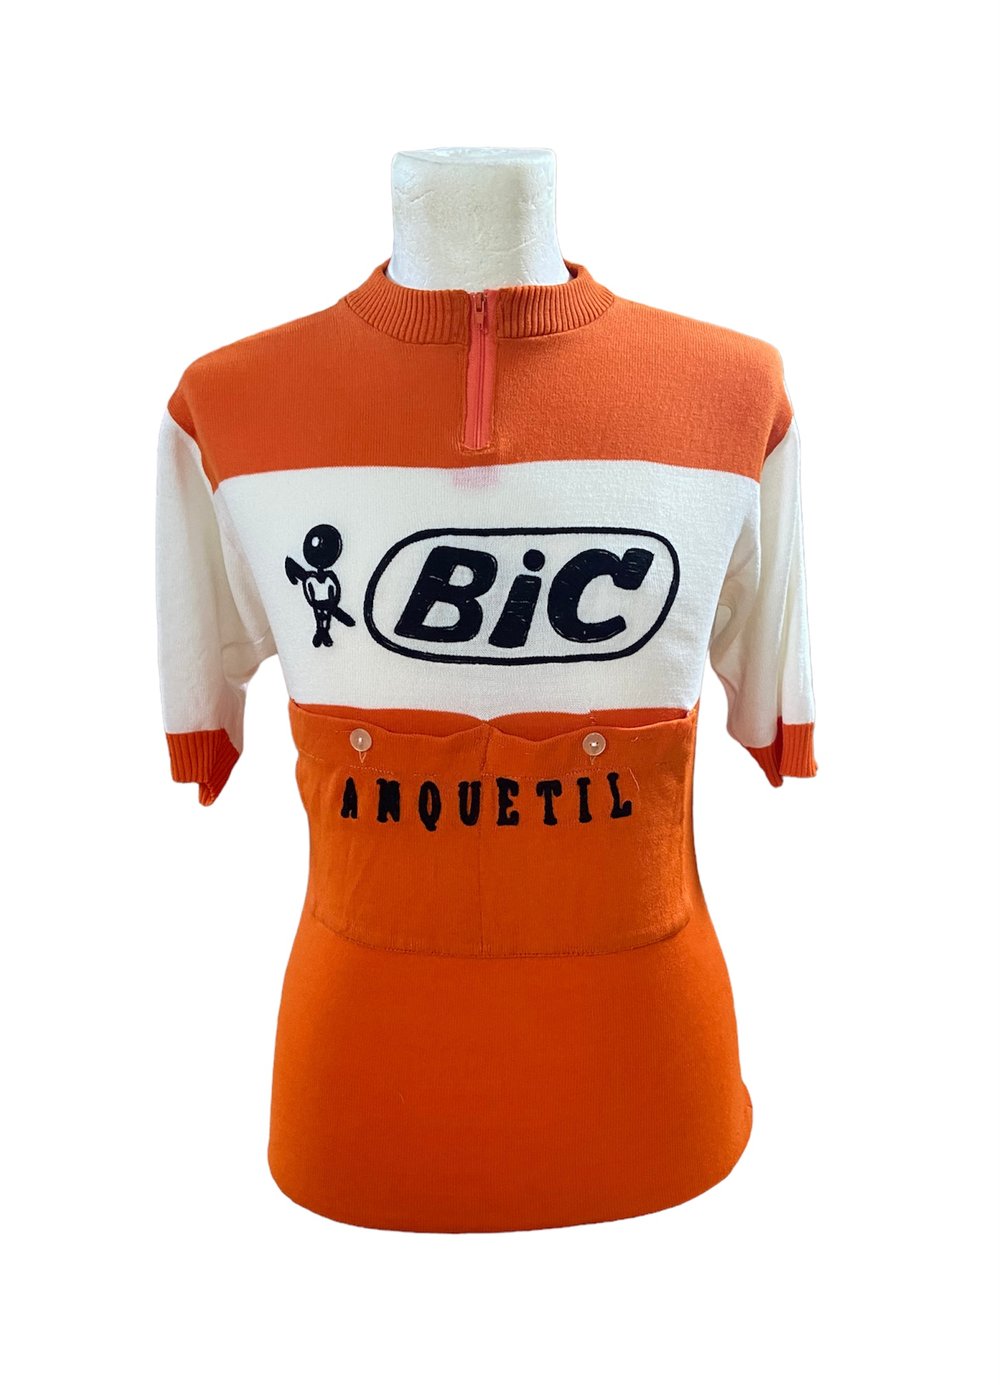 1969 - Bic Anquetil - Critérium jersey for Cycles Anquetil 